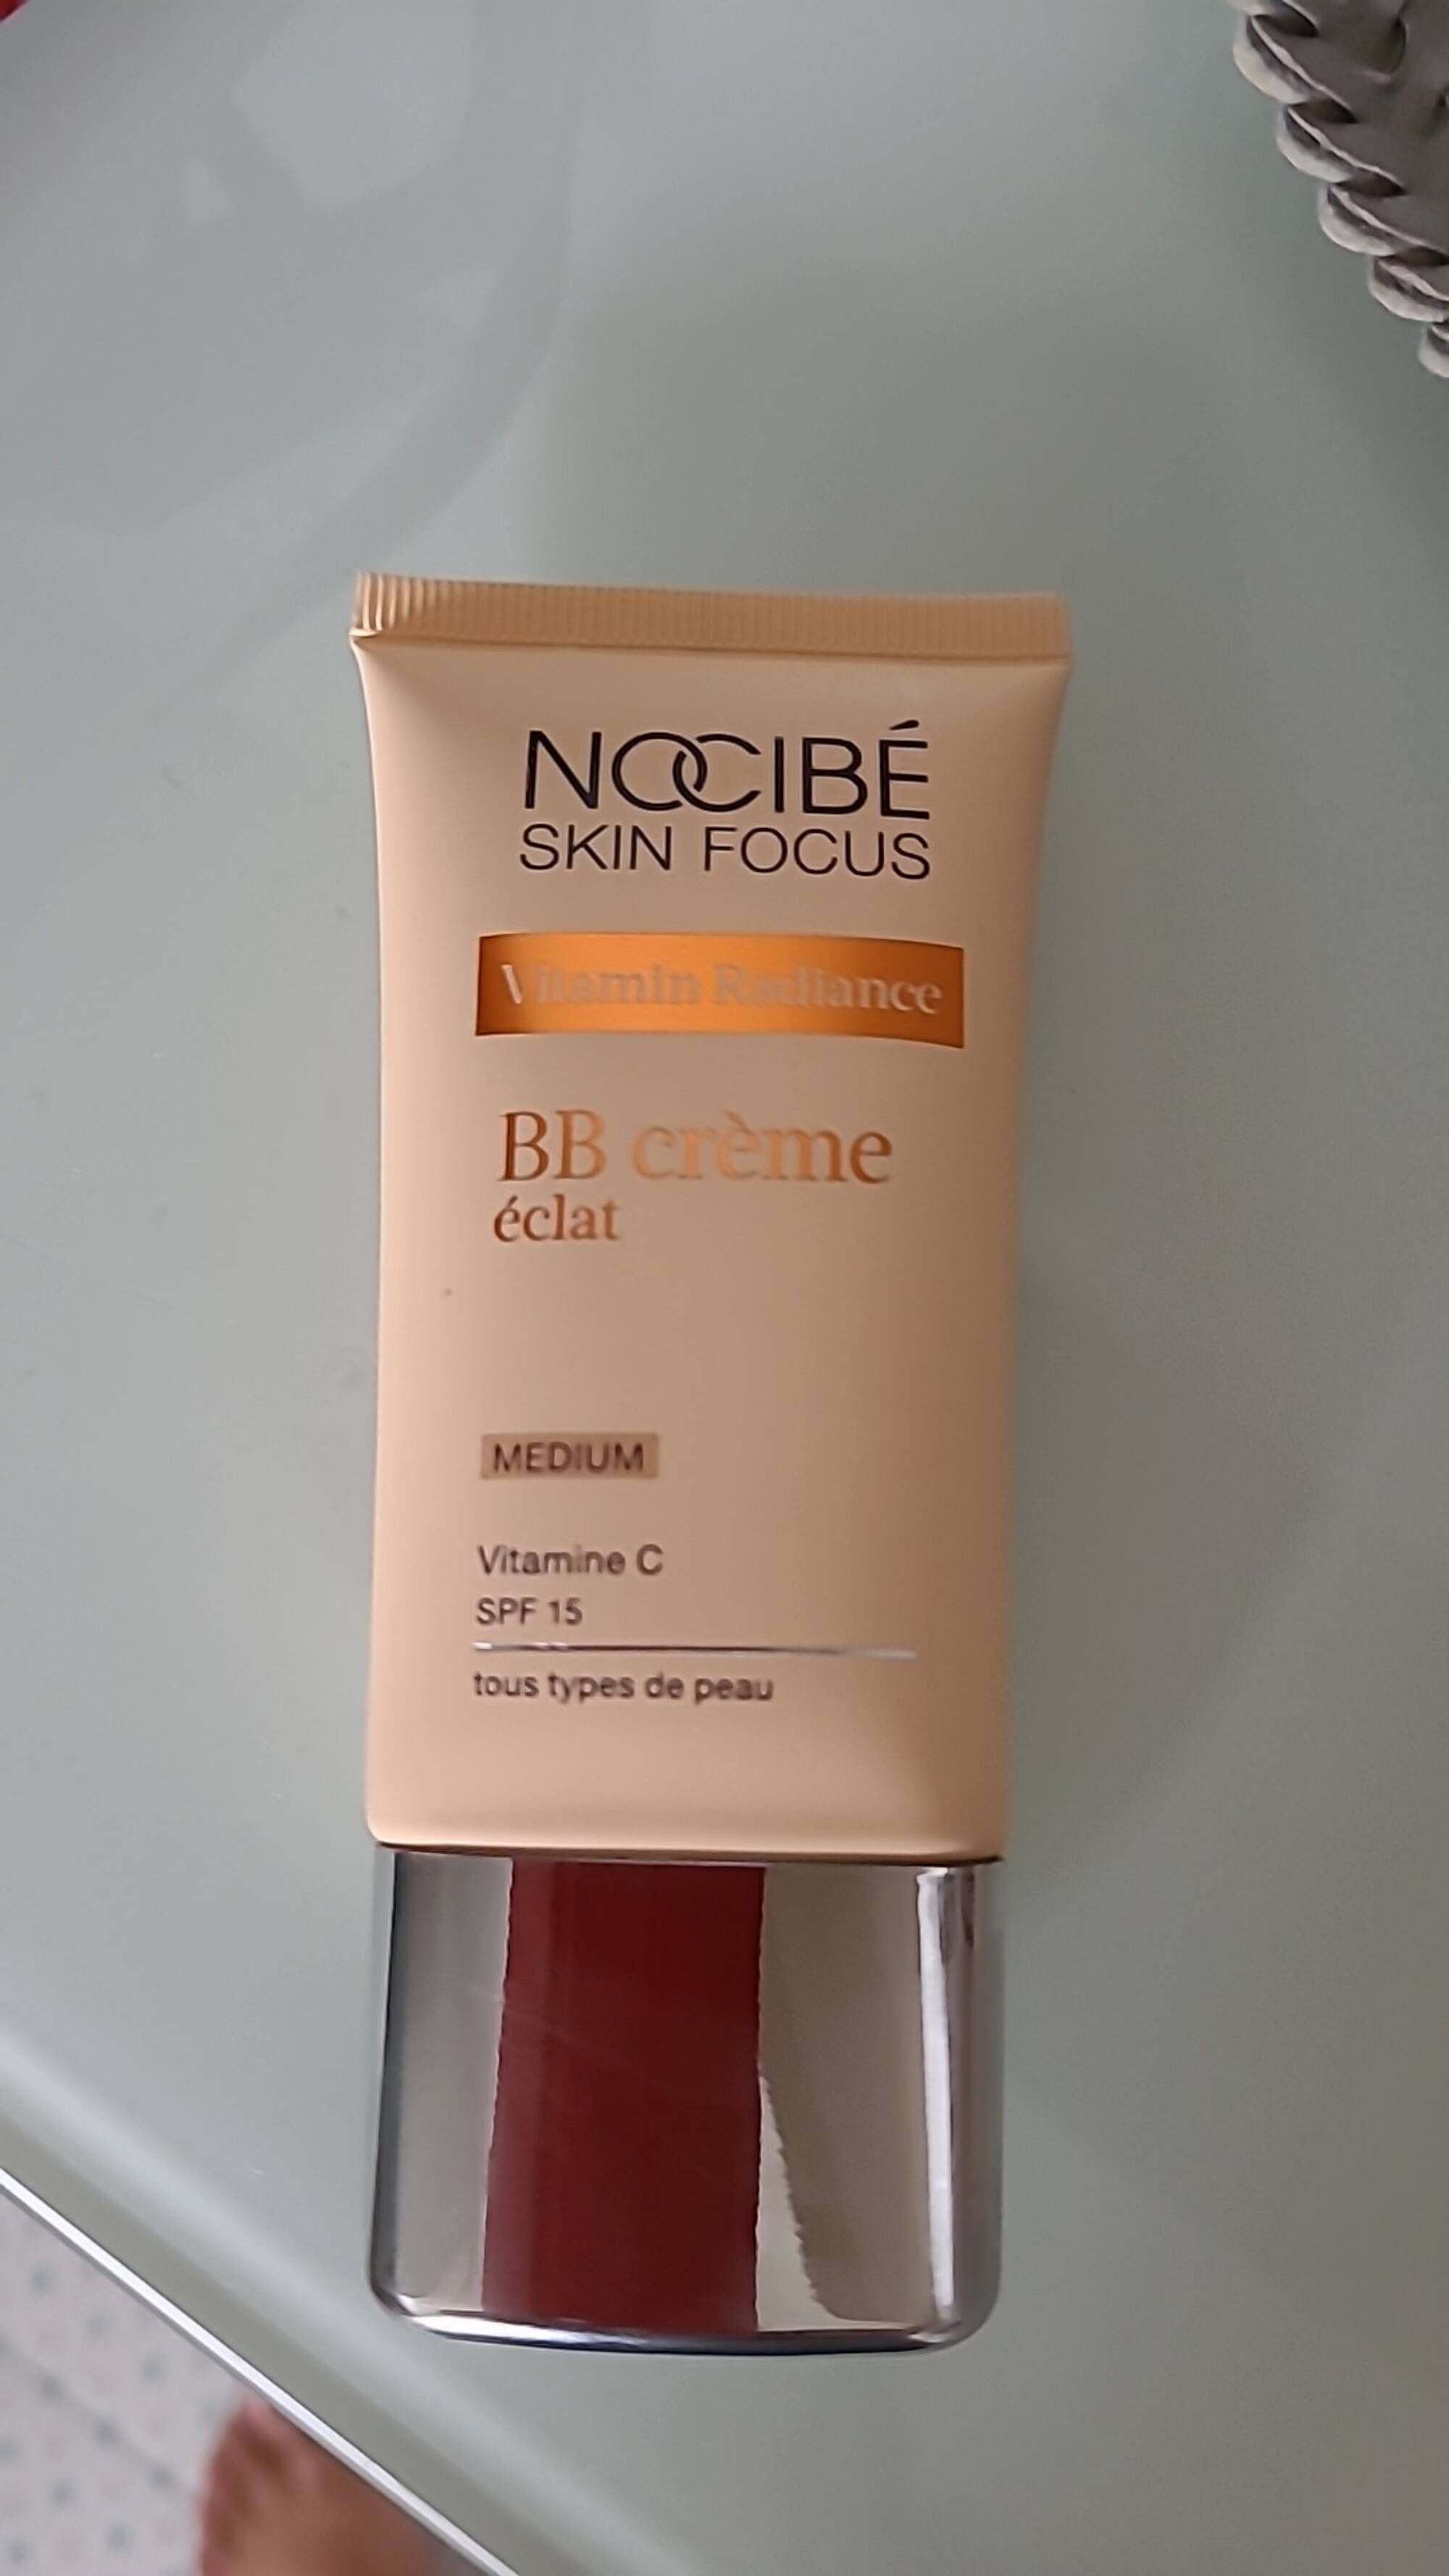 NOCIBÉ - Vitamin radiance - BB crème éclat medium SPF 15